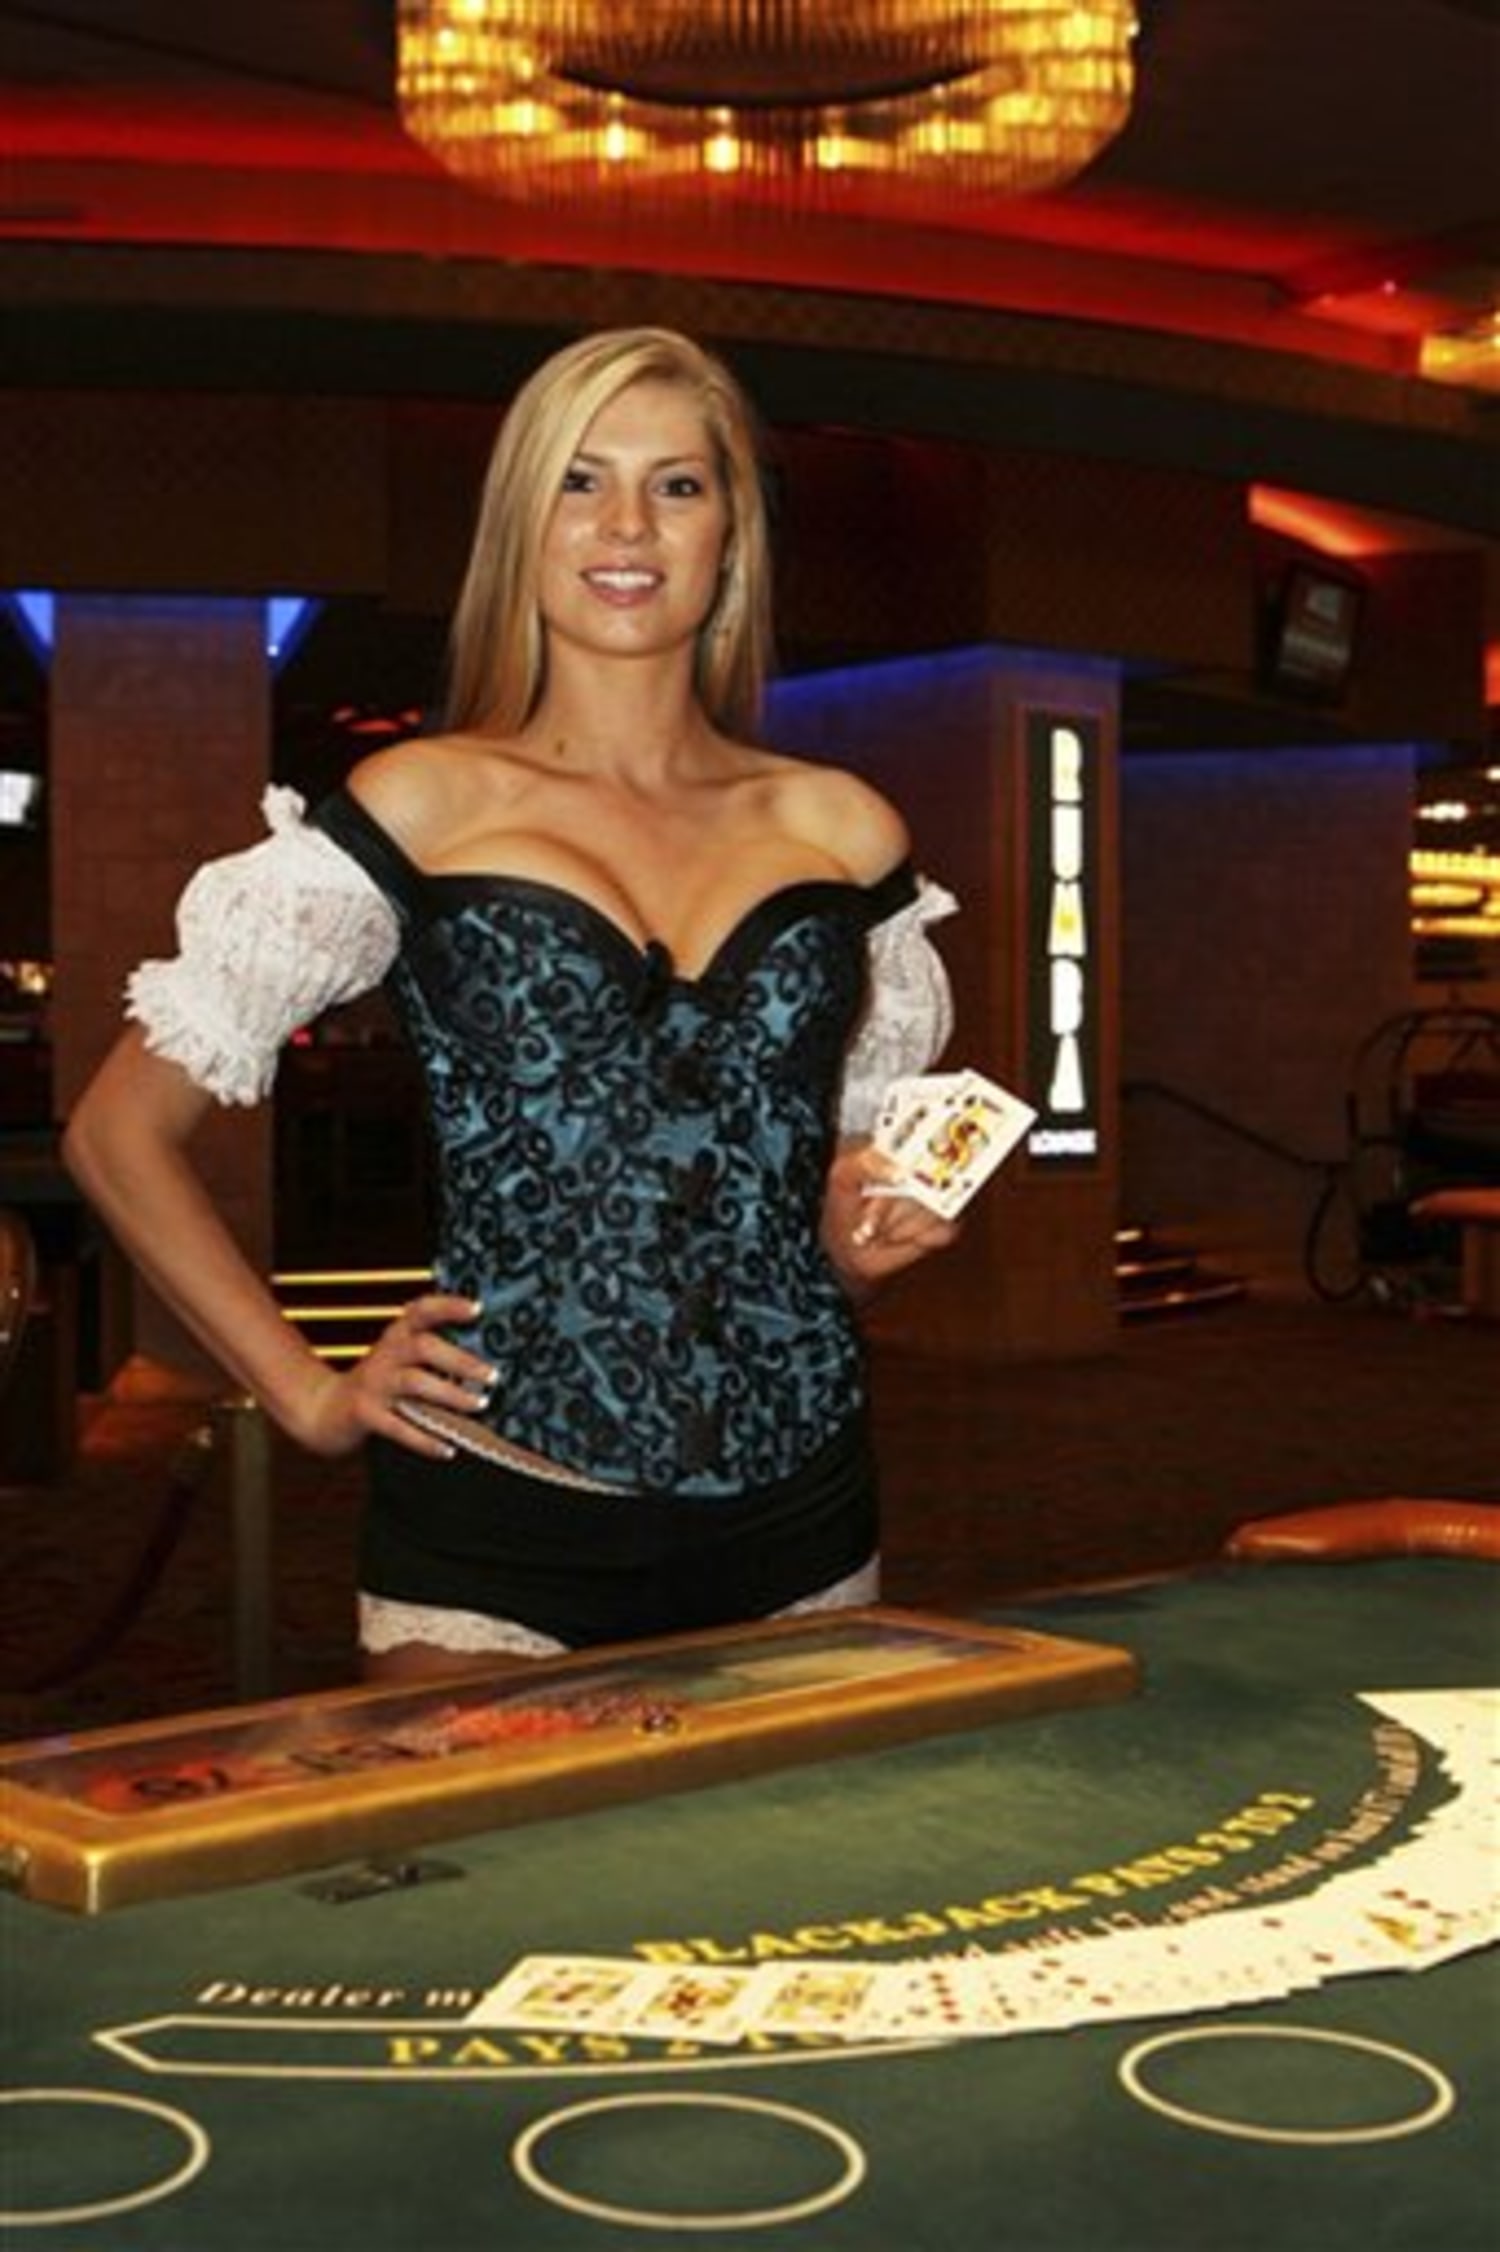 Sex and Atlantic City Casino resort heating up image